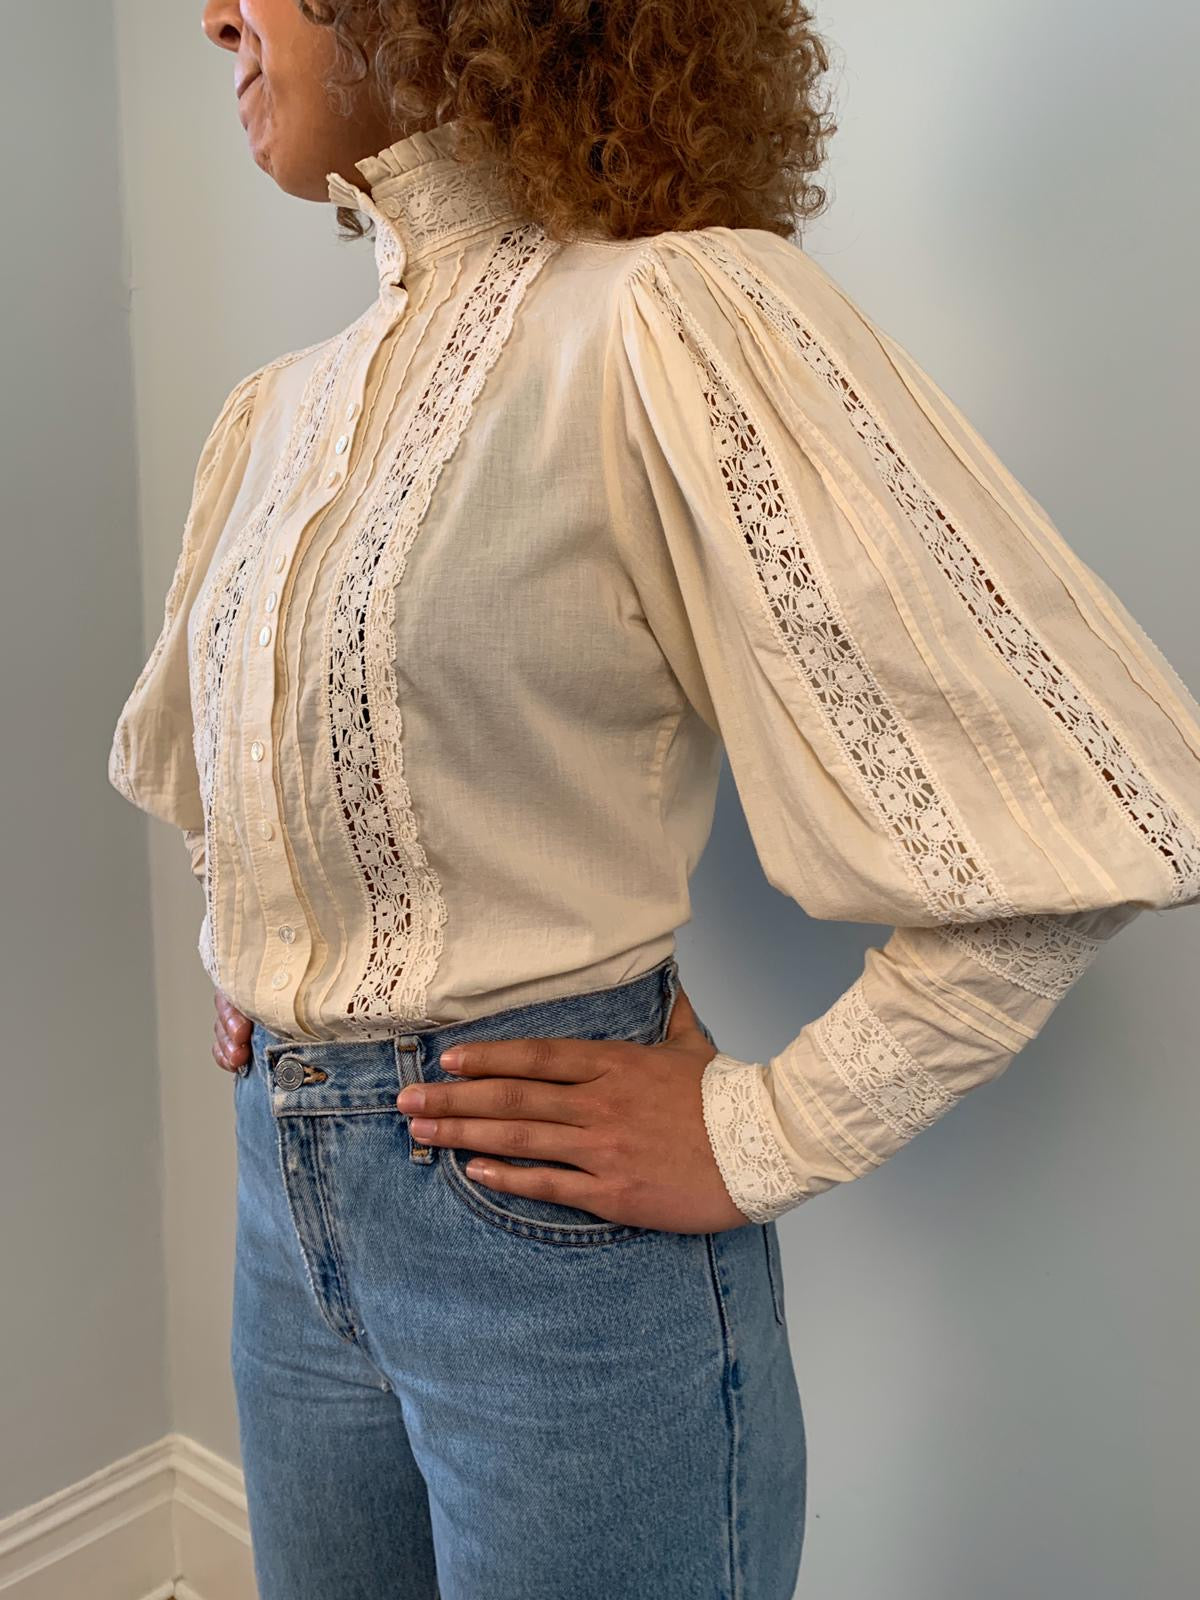 Laura Ashley 1970's Edwardian style blouse with lace